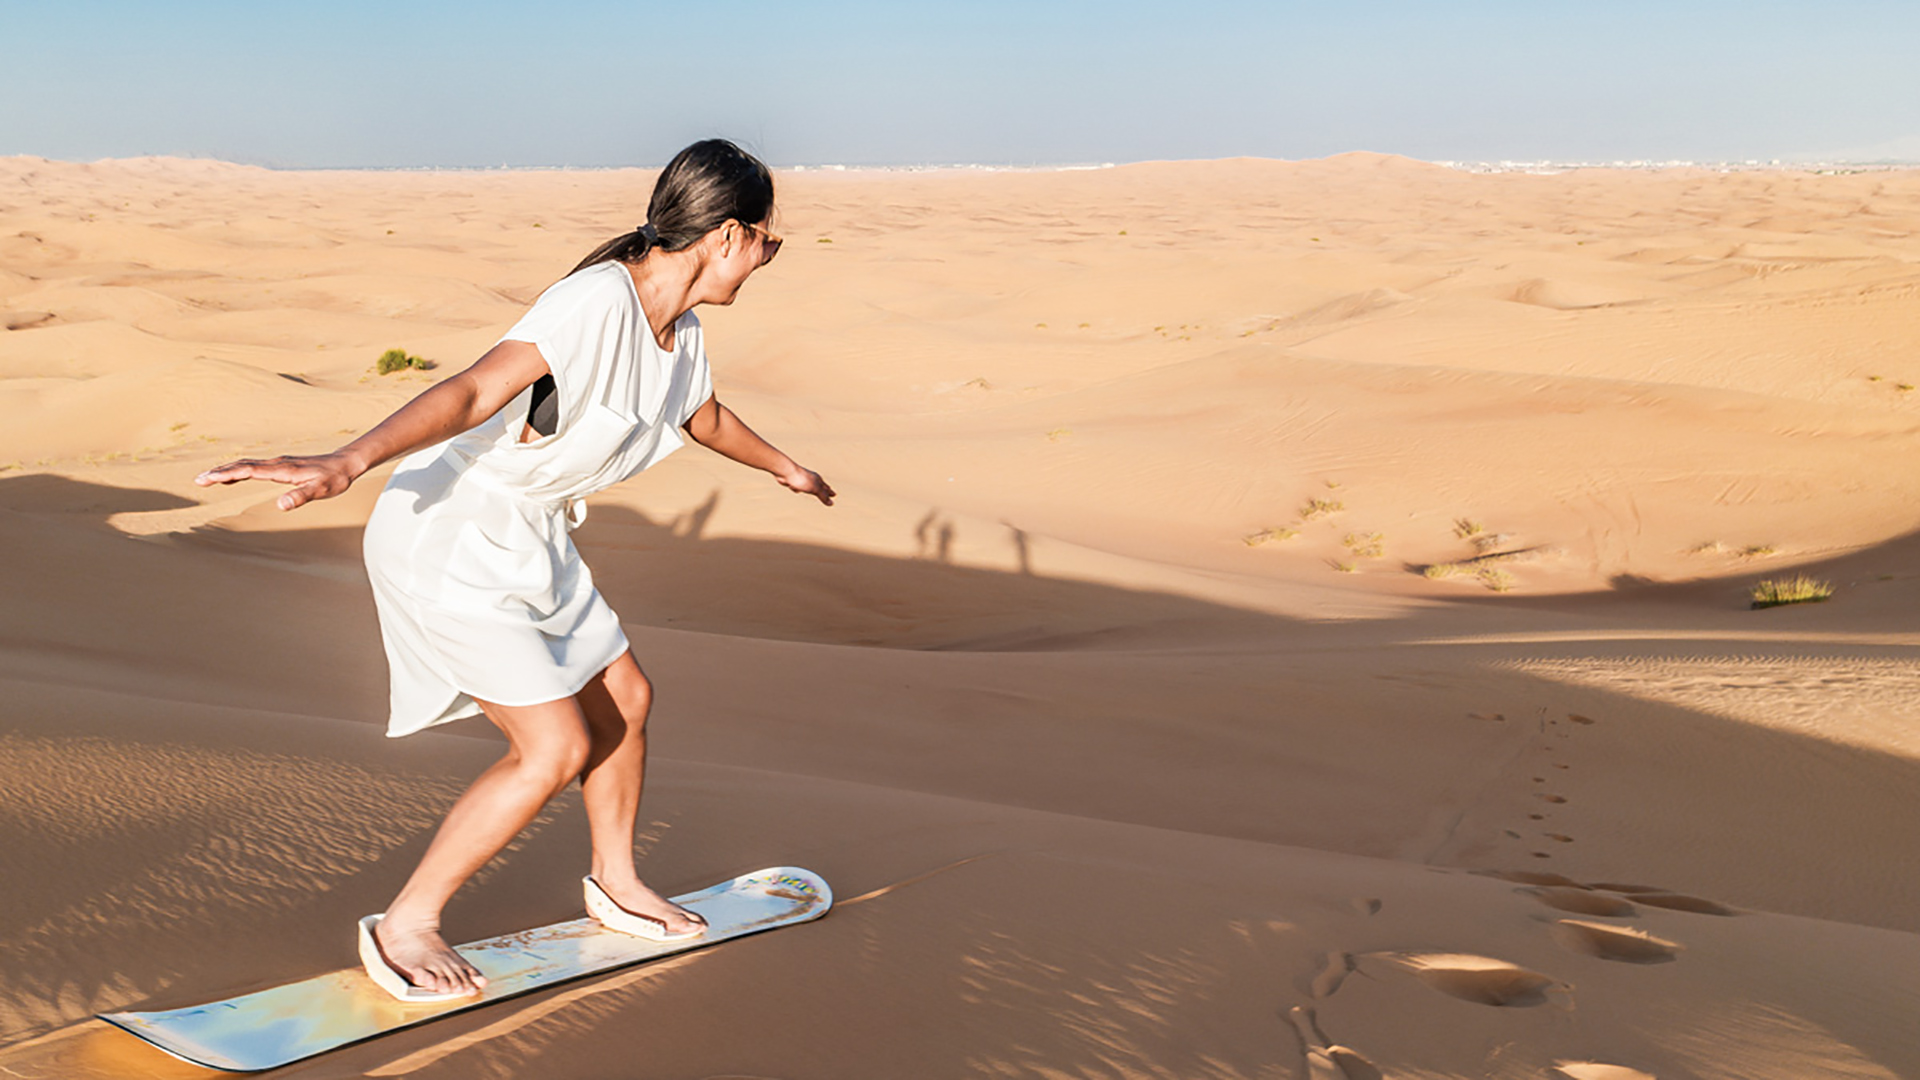 Camel ride in the red dunes of Dubai during a premium safari experience